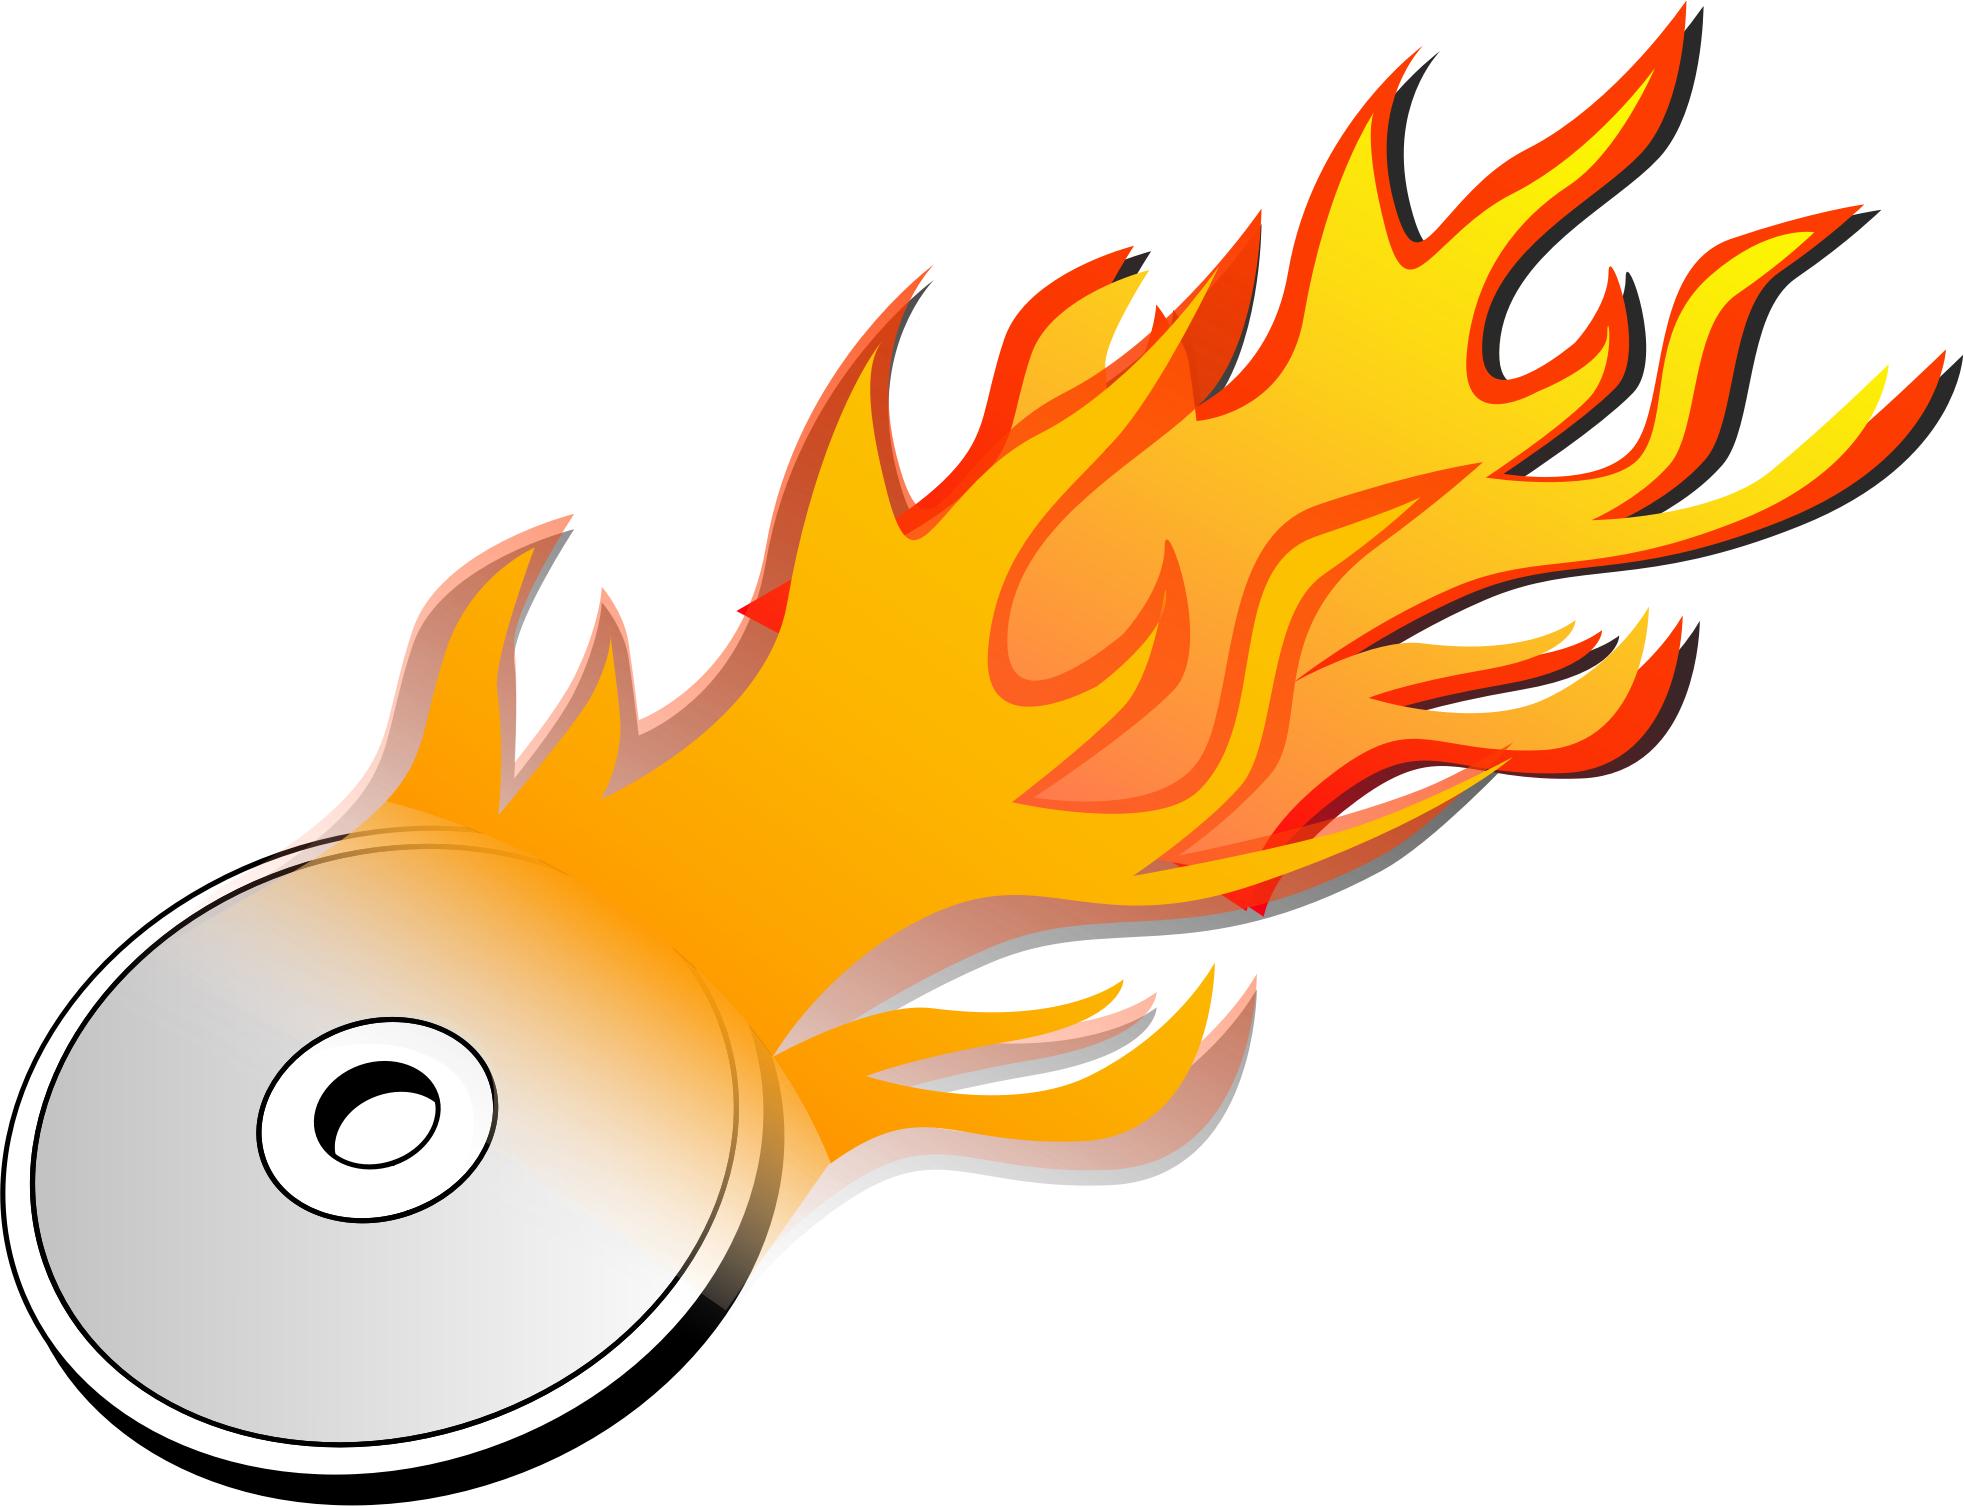 CD DVD burn png